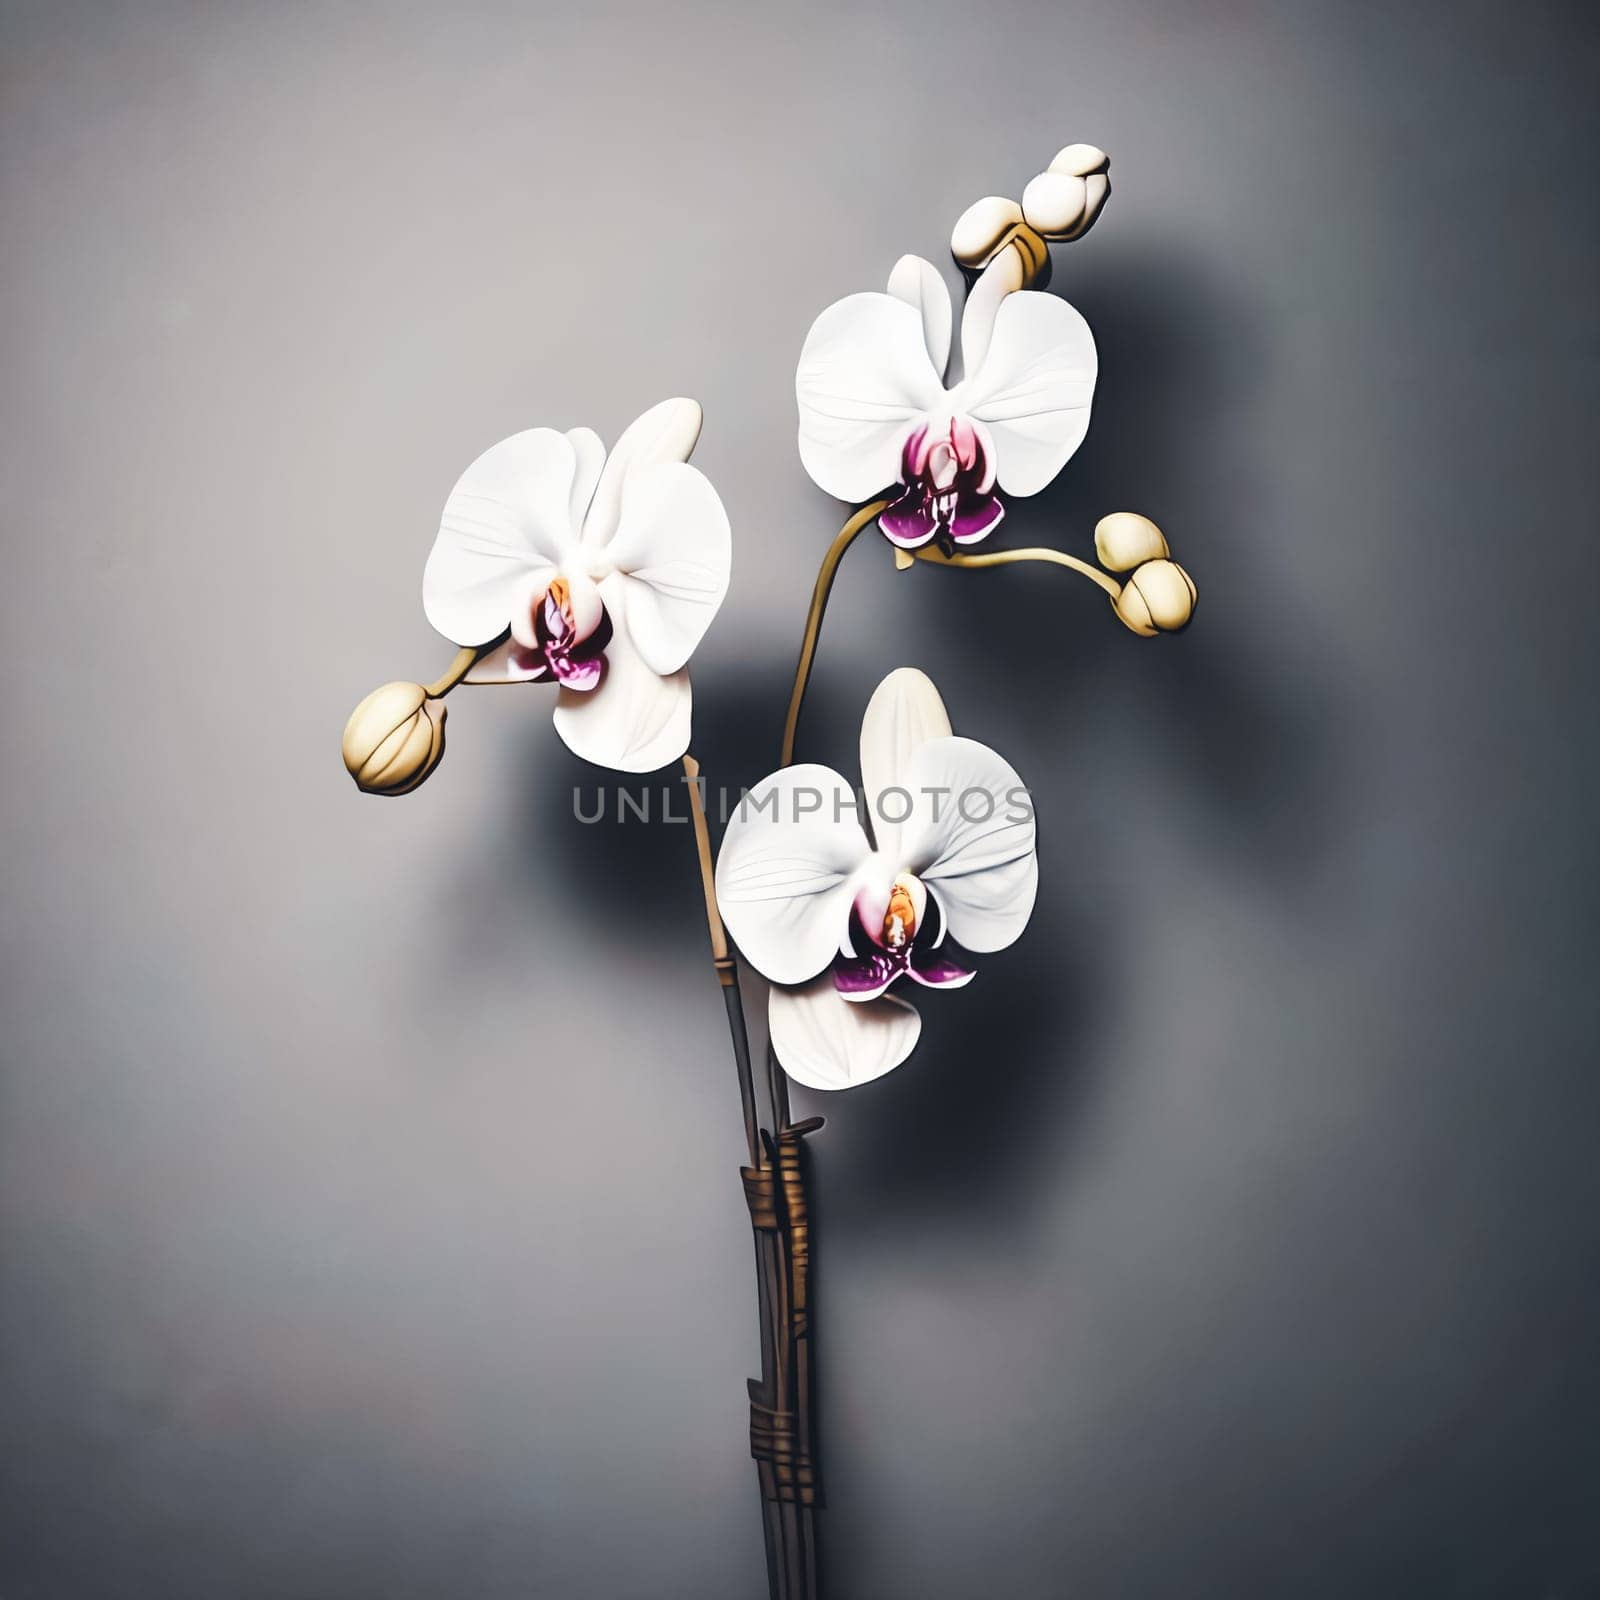 Minimalist background featuring a single elegant orchid. by GoodOlga